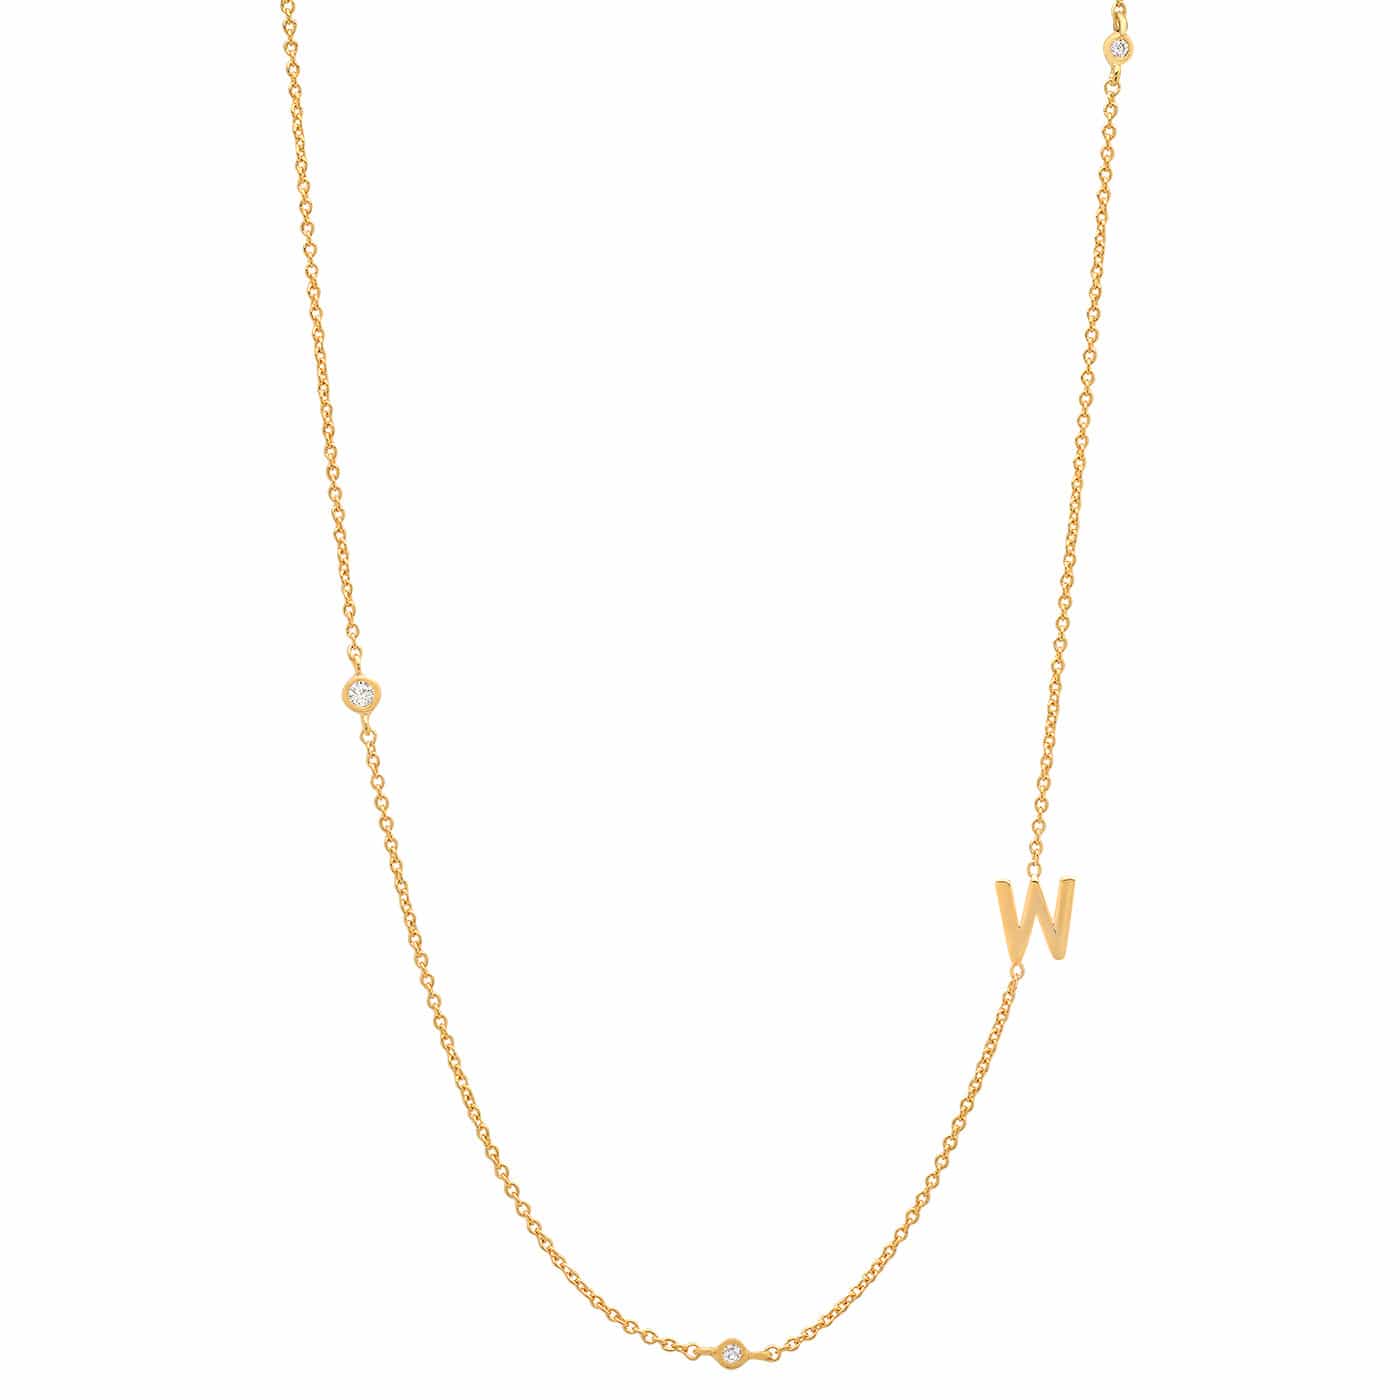 TAI JEWELRY Necklace W Sideways Initial Gold Necklace With CZ Accents